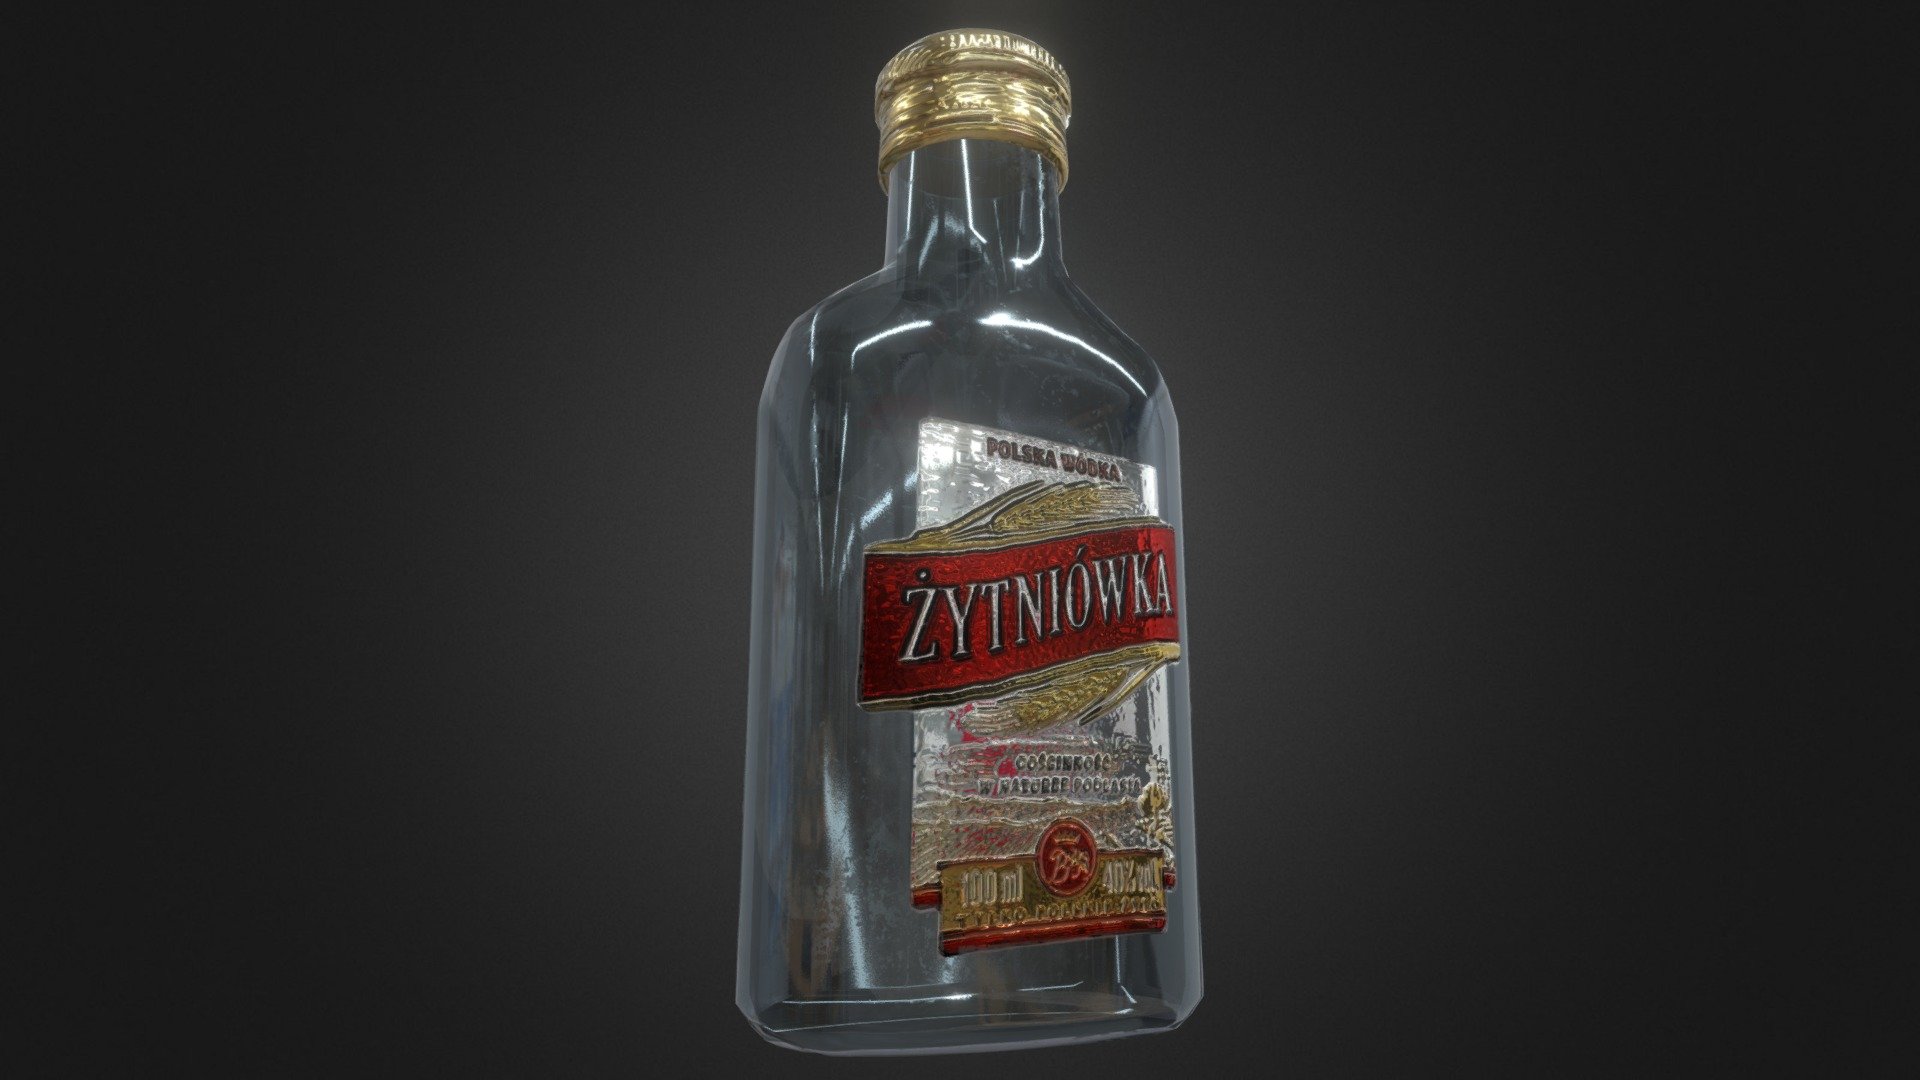 Delicious Polish vodka bottle